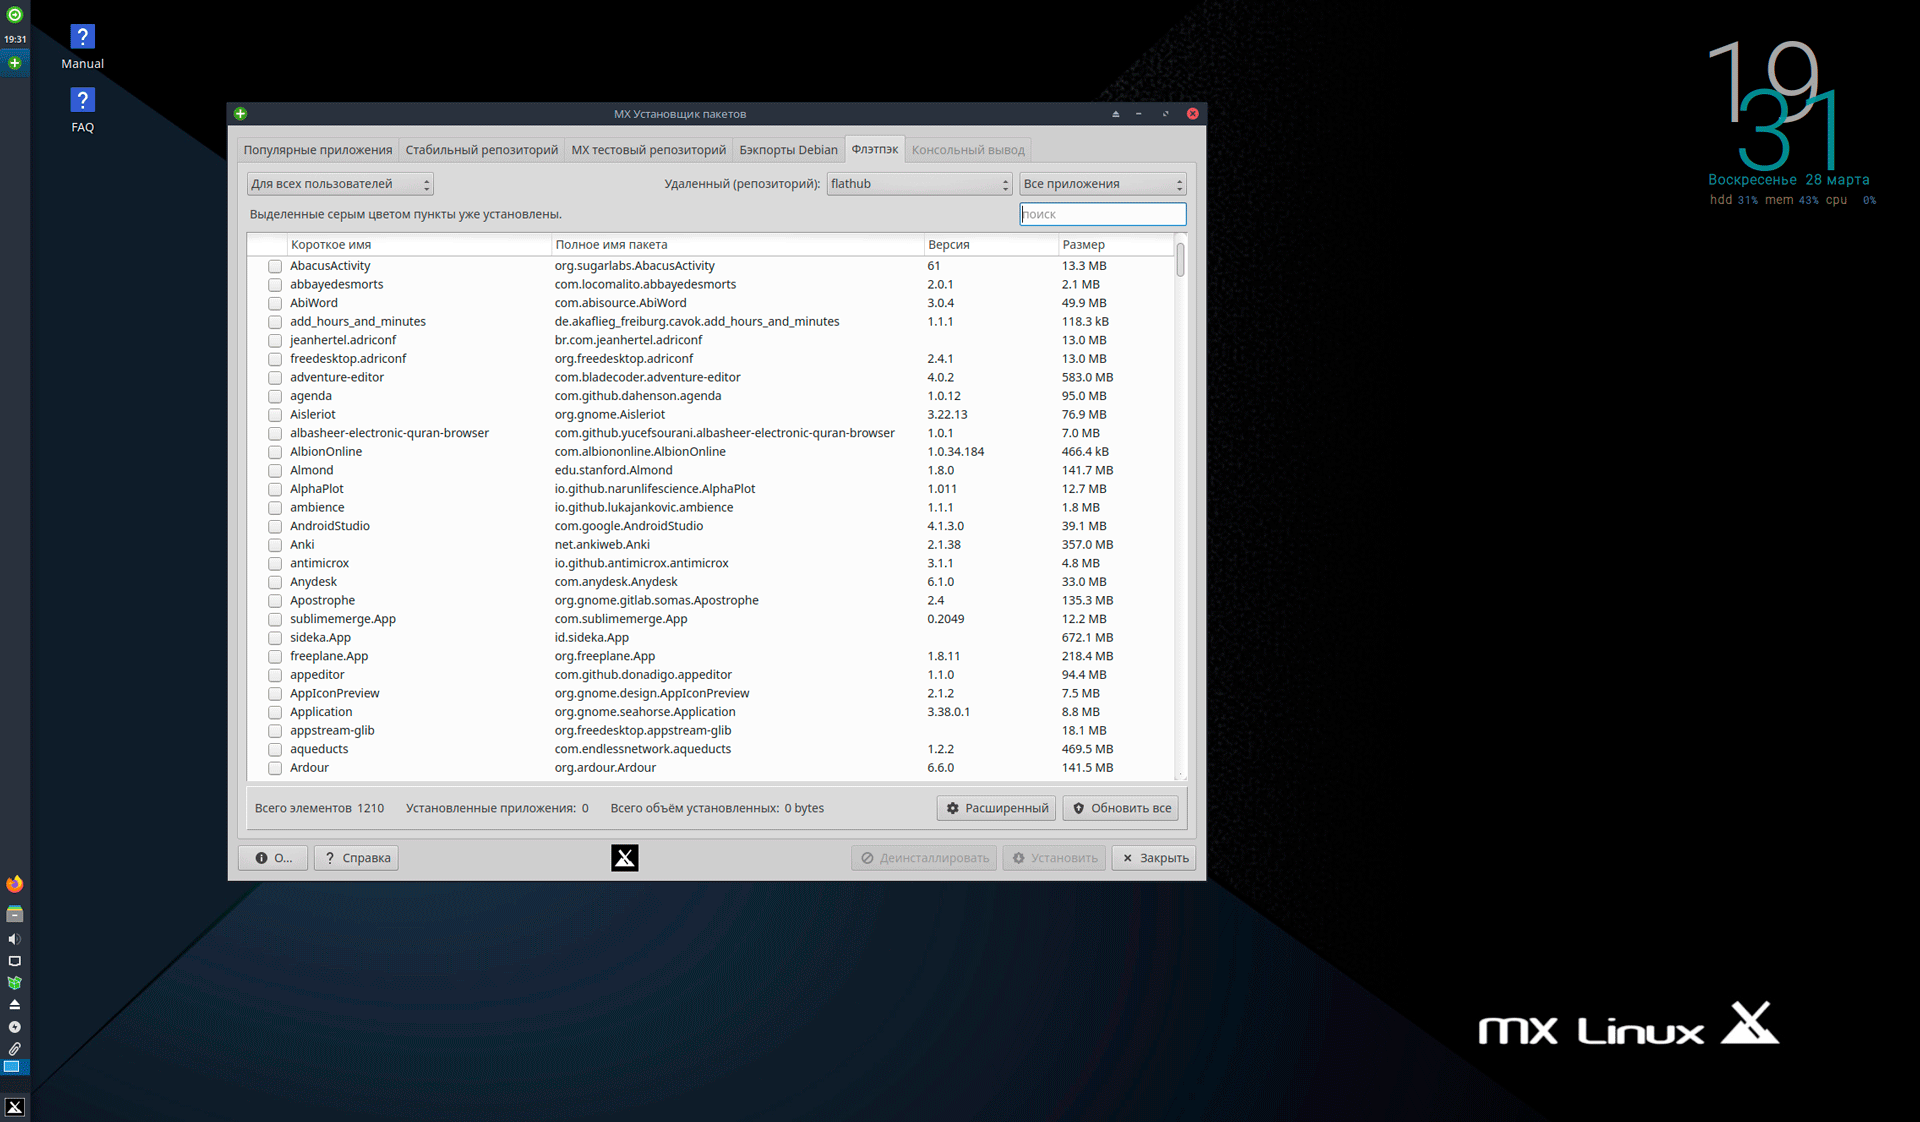 https://interface31.ru/tech_it/images/MX-Linux-19.3-009.png